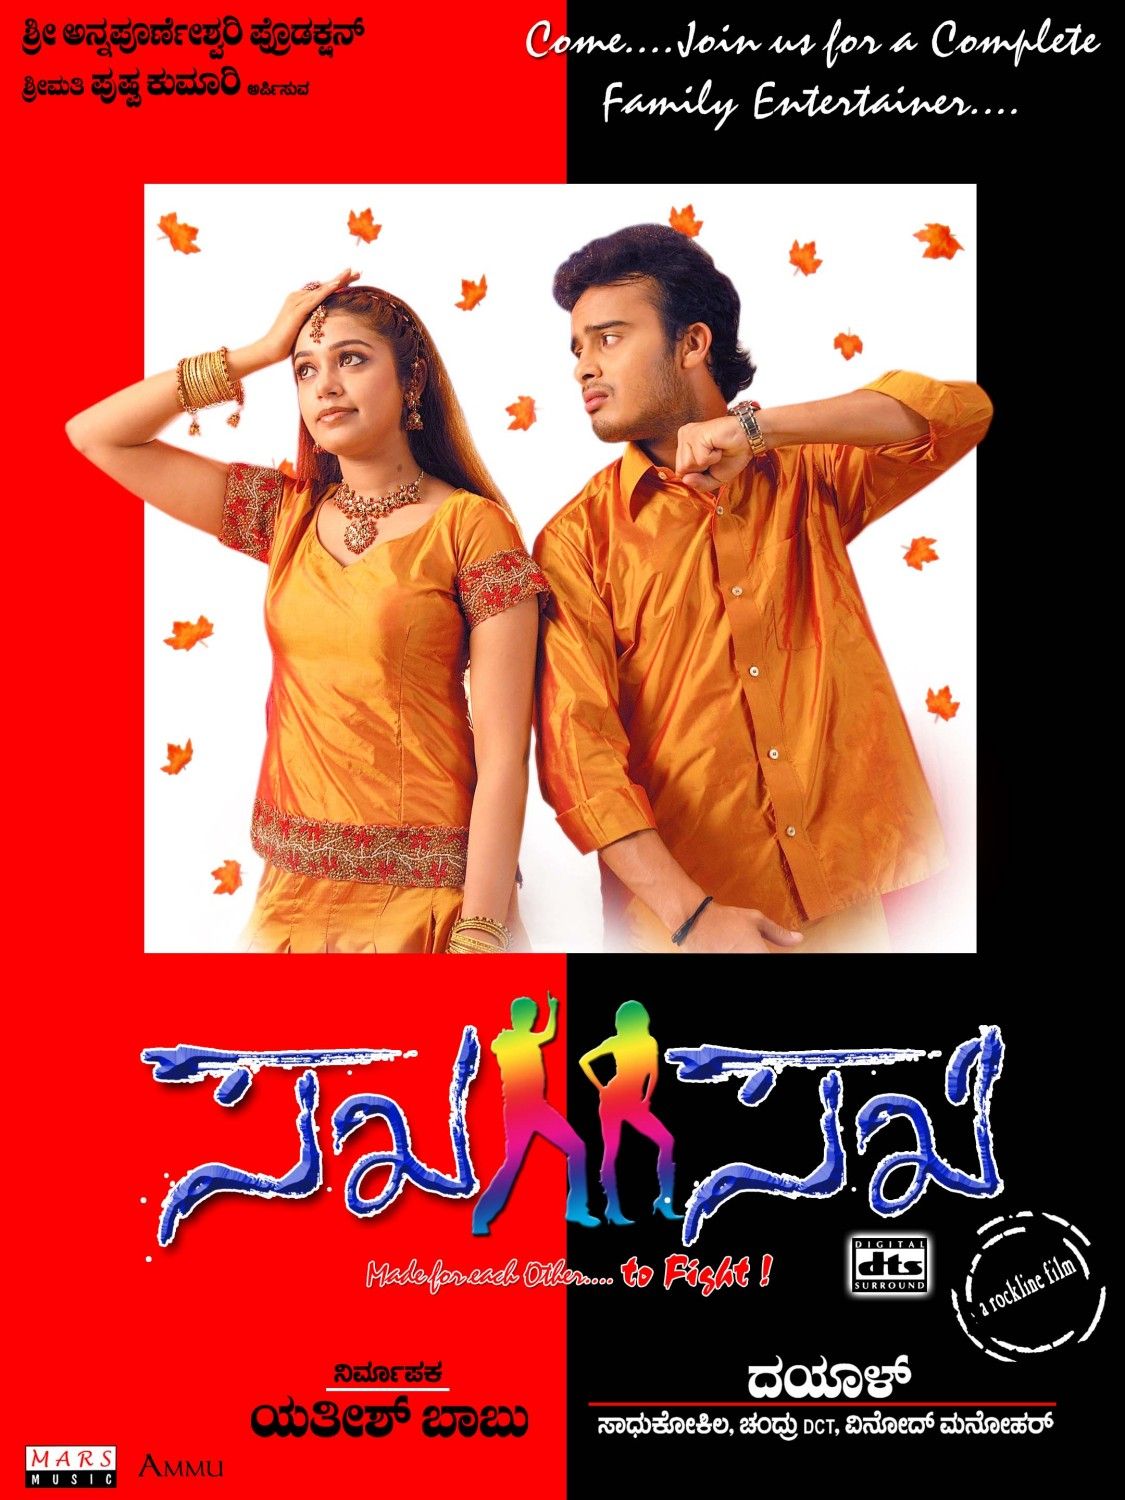 Extra Large Movie Poster Image for Sakha Sakhi (#10 of 10)